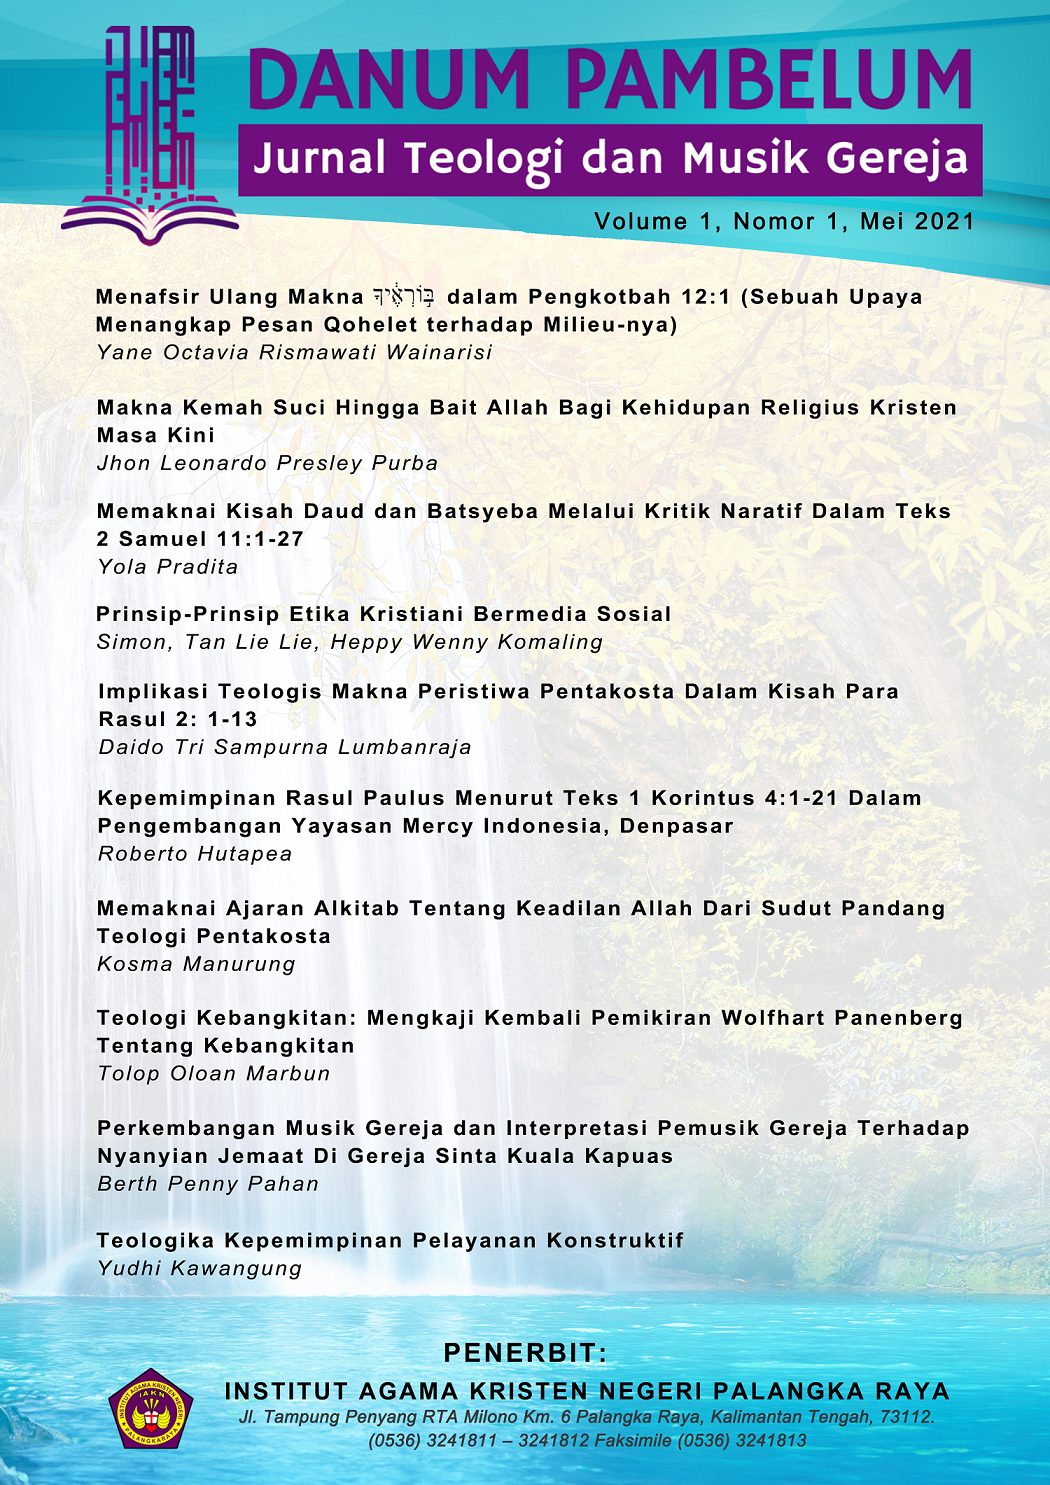 Hasil penelitian tentang Yayasan Mercy Indonesia